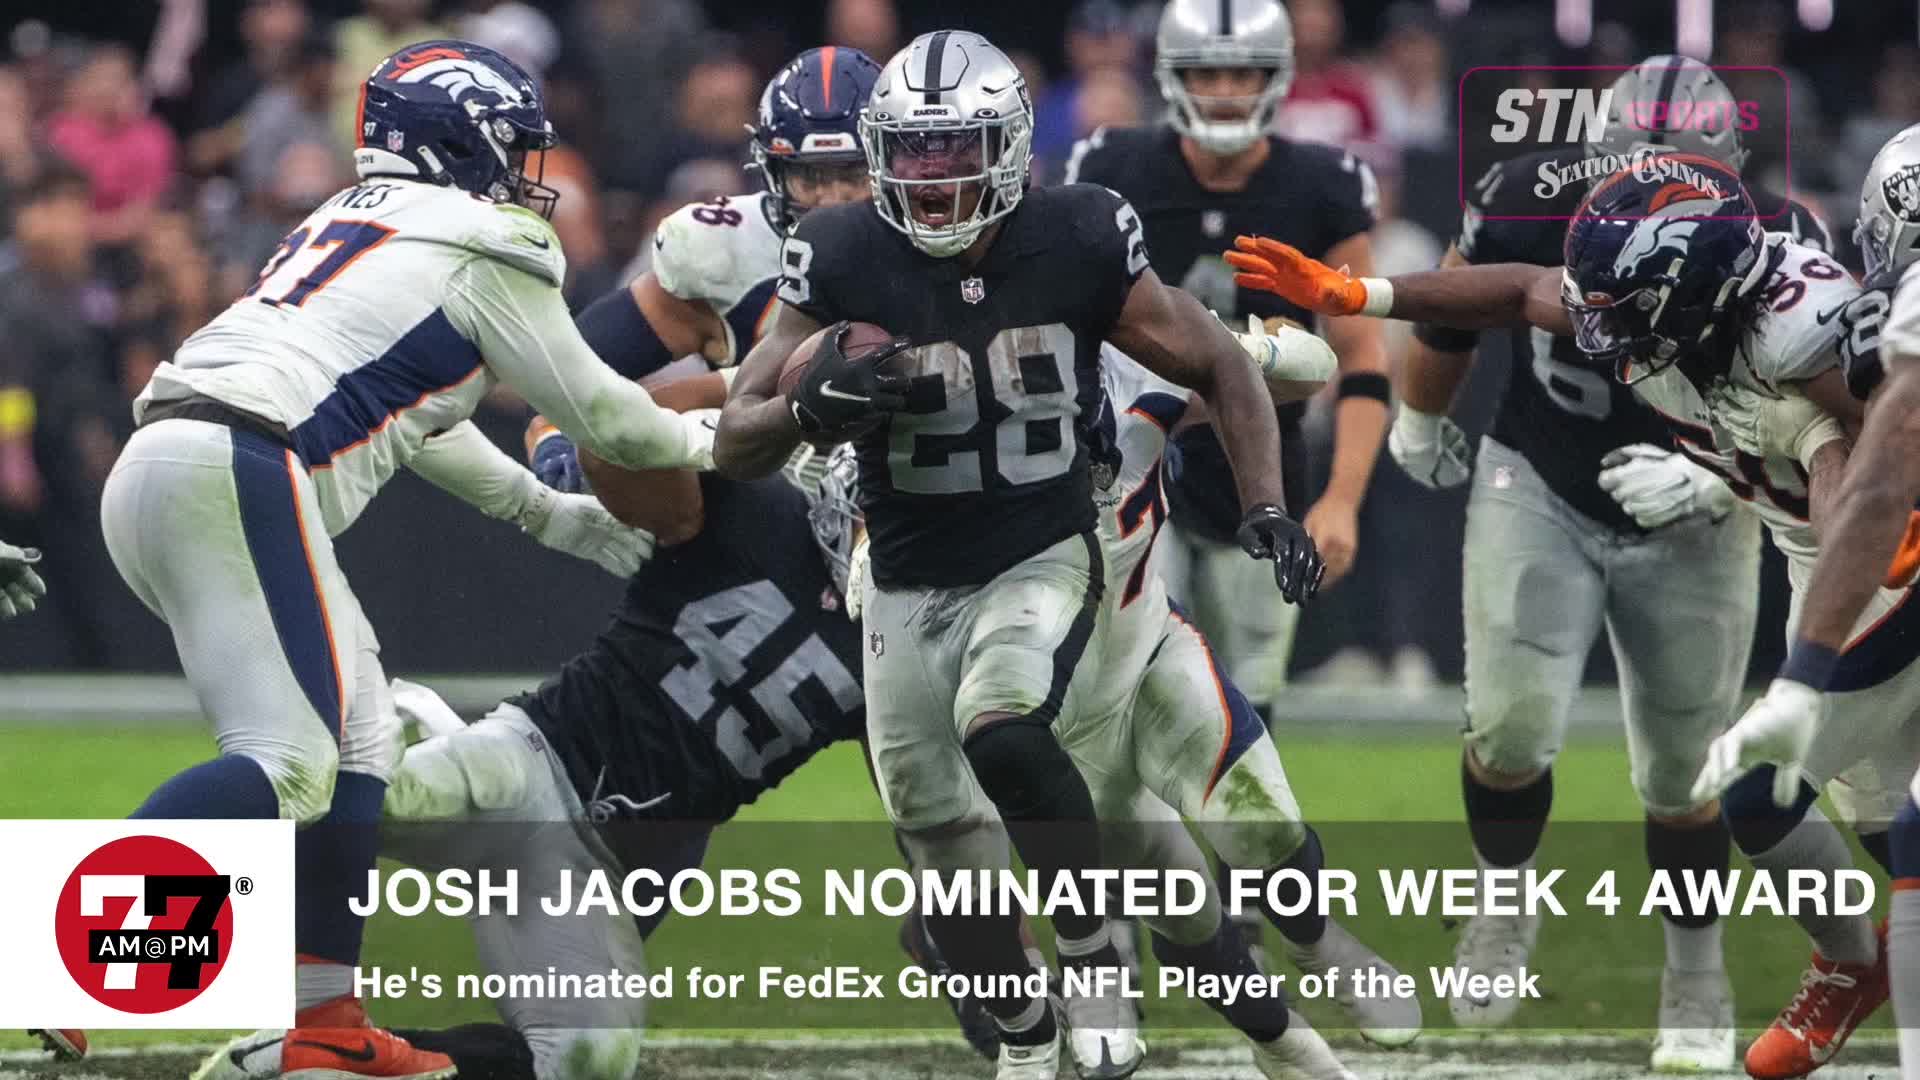 Josh Jacobs nominated for week 4 award